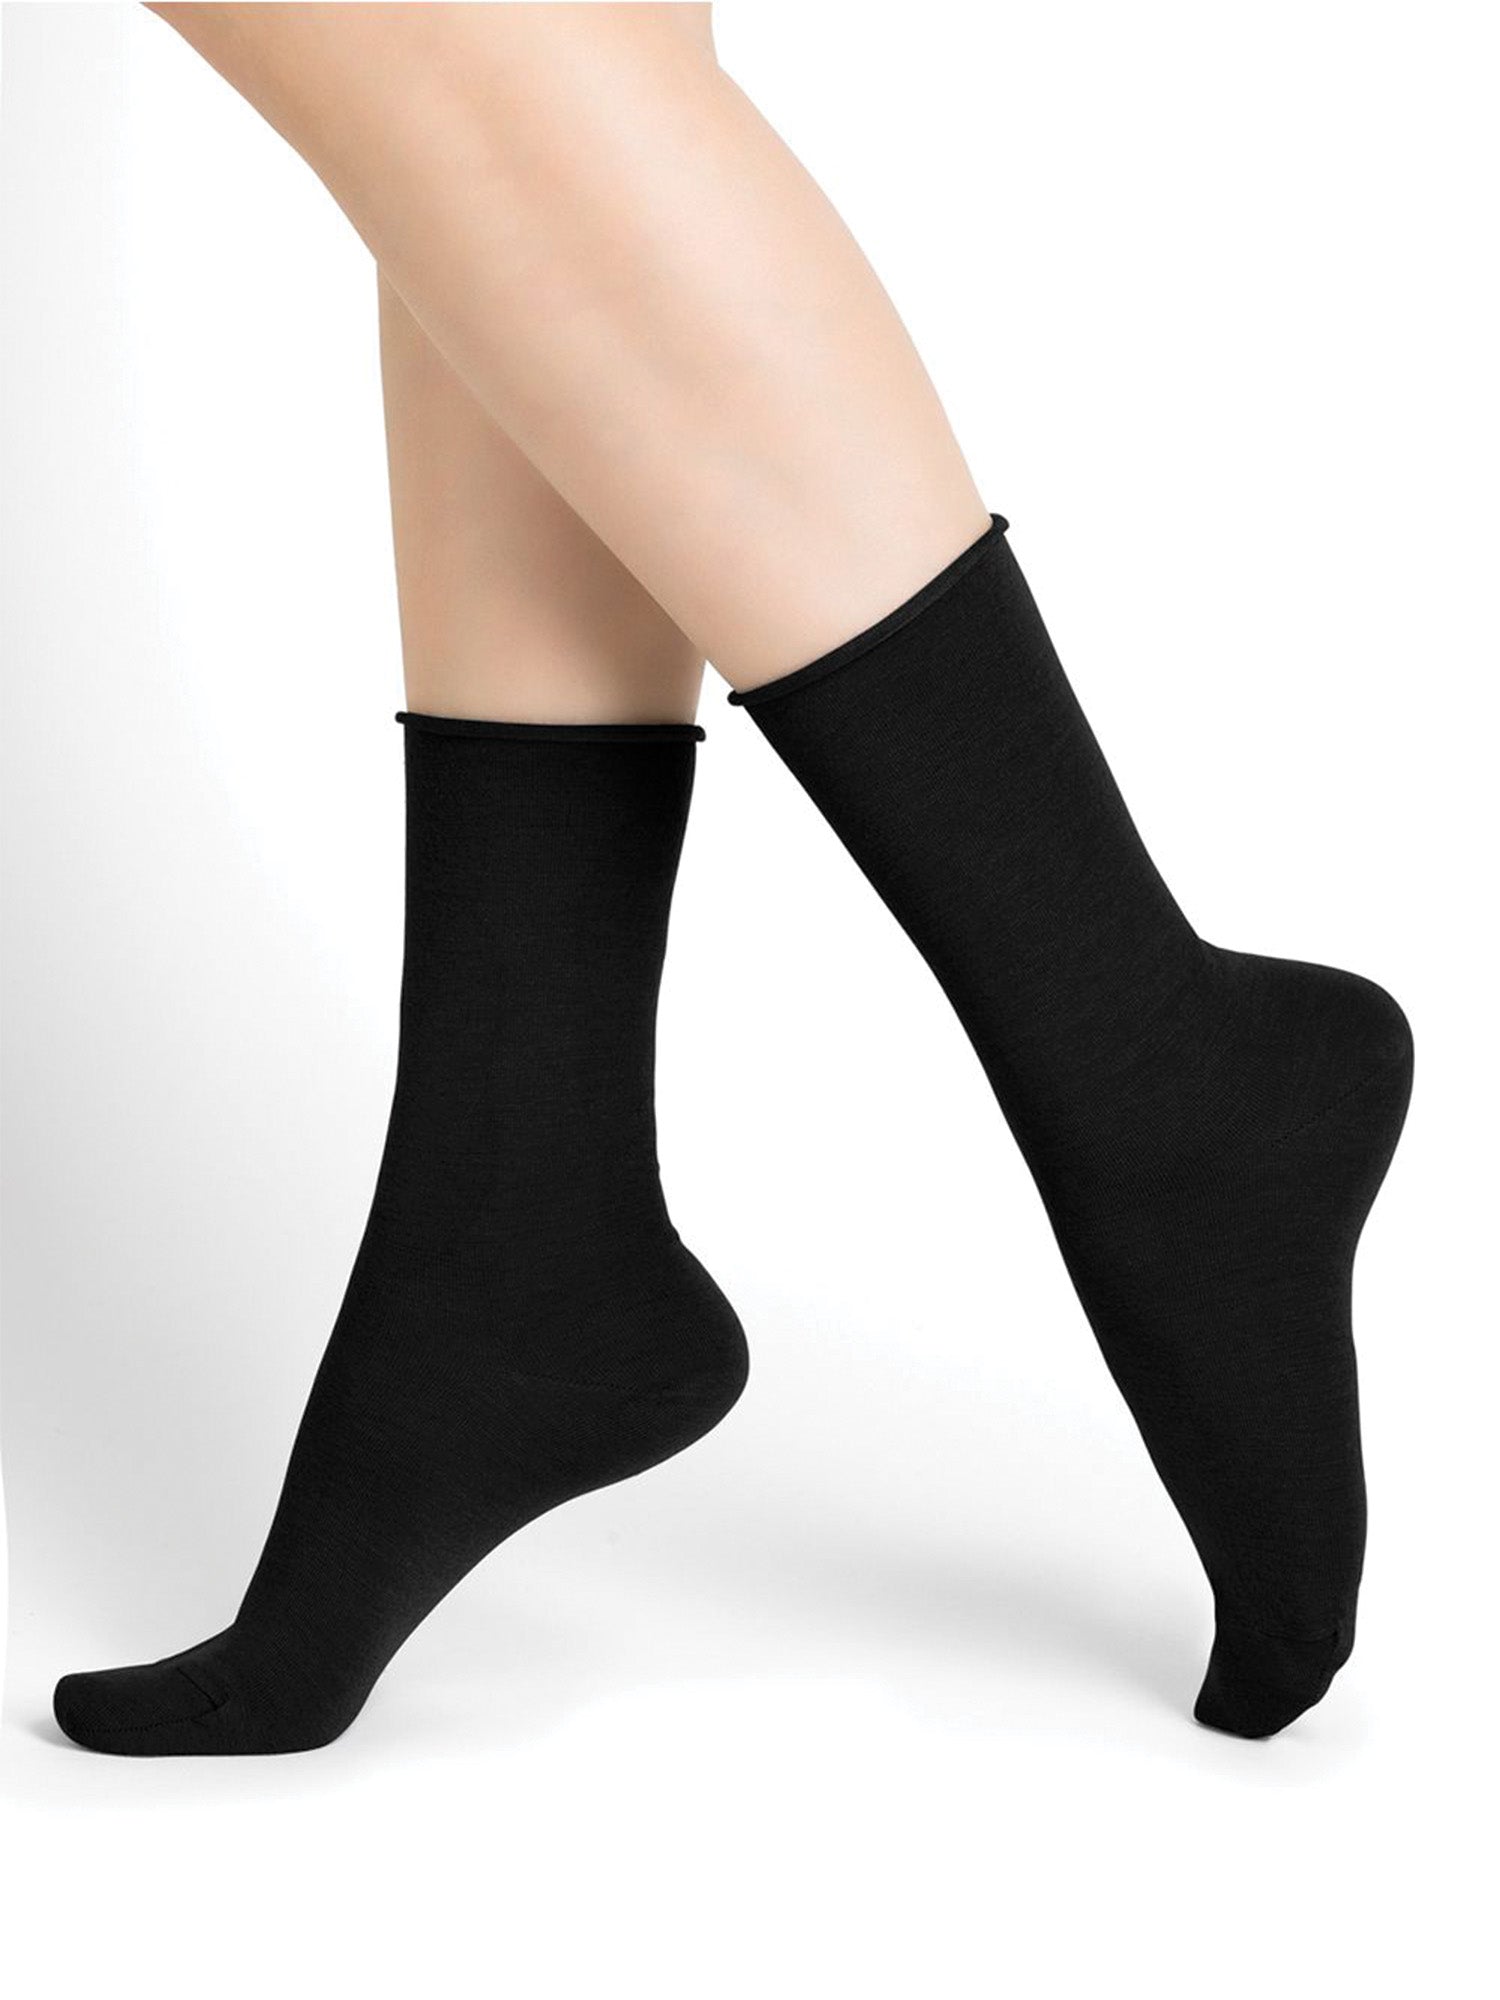 Busy Socks Cozy Wool Cabin Socks for Women, Mens Ankle Athletic Comfort Fit  Anti Odor Tennis Golf Cycling Running Socks Wool, Black, Medium,1 Pair at   Women's Clothing store